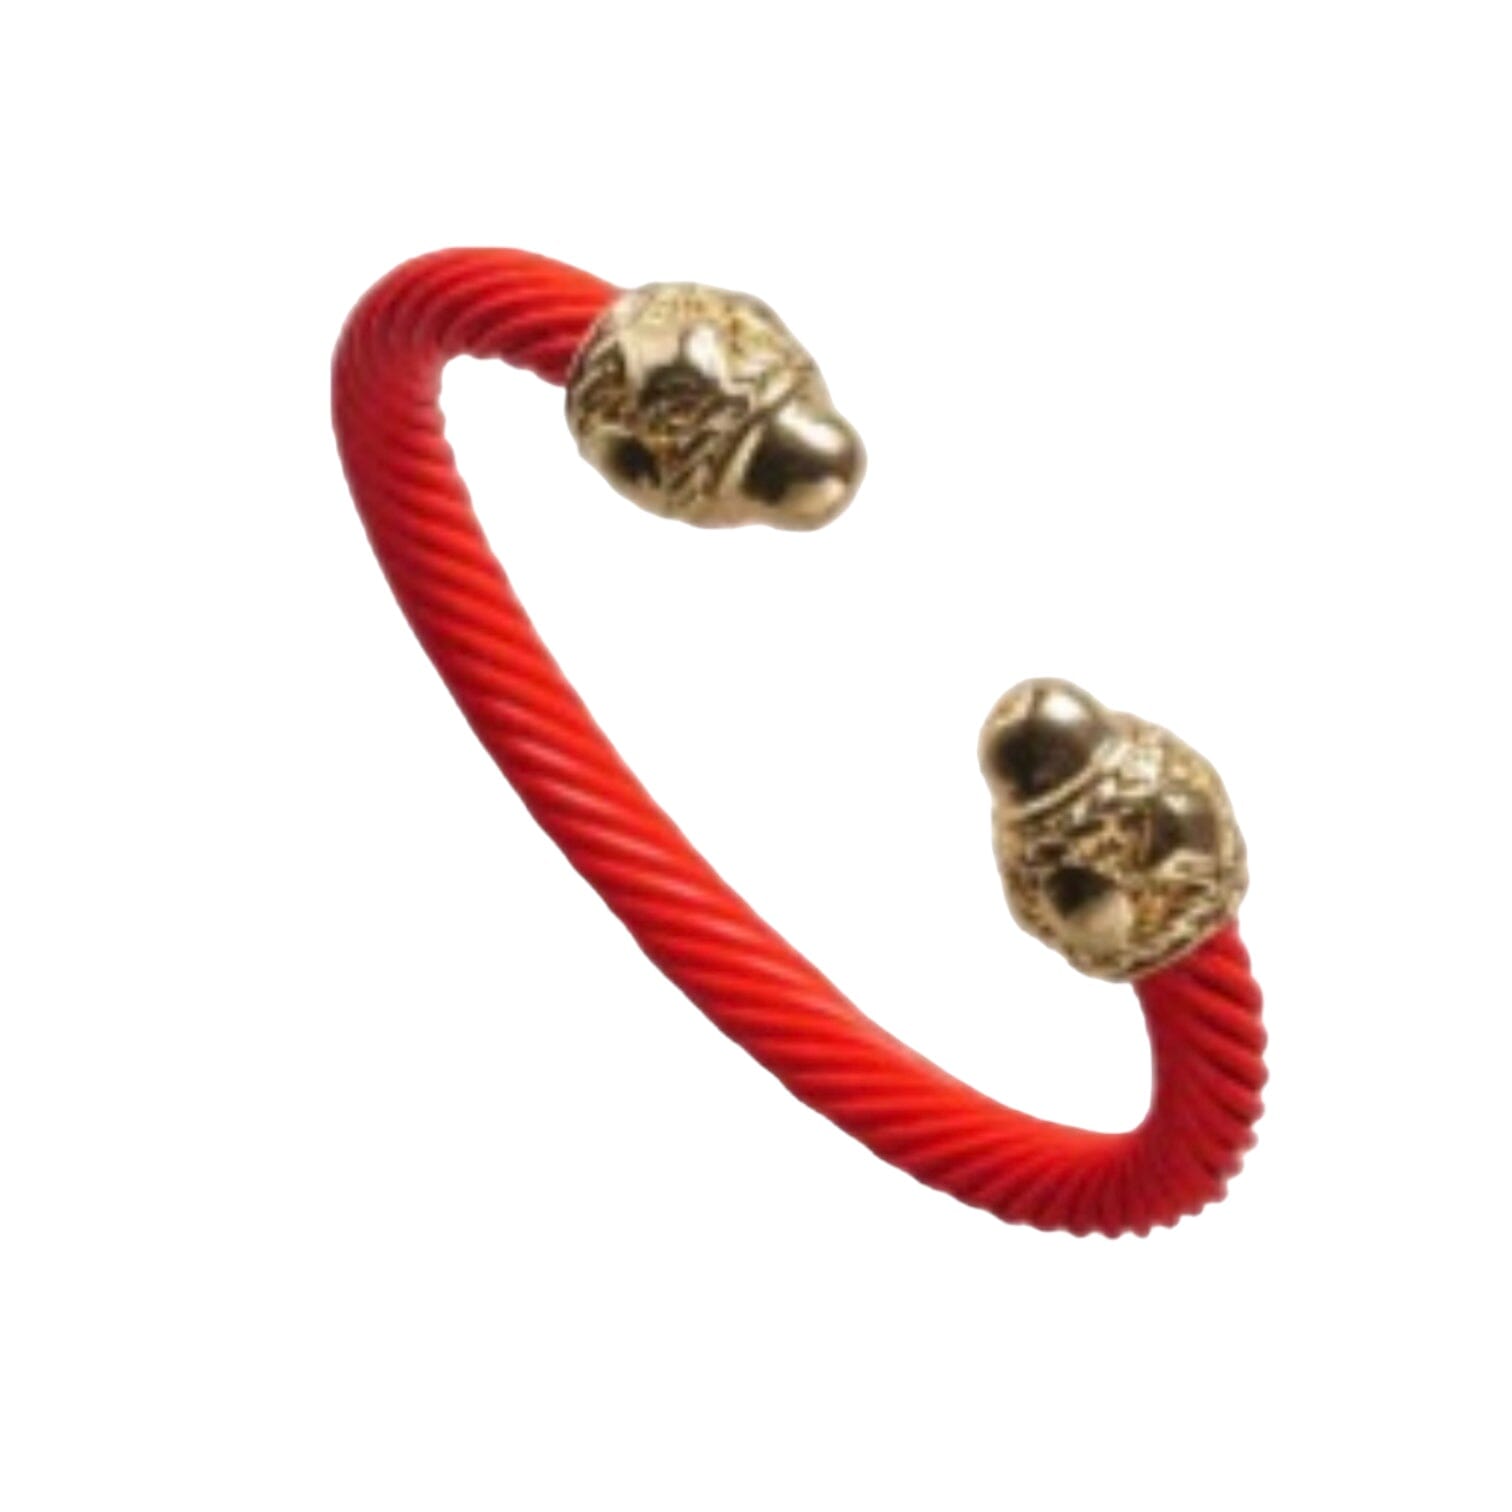 Tessa Bangle Gold Tip Bracelet Red and White Bracelets TRENDZIO 